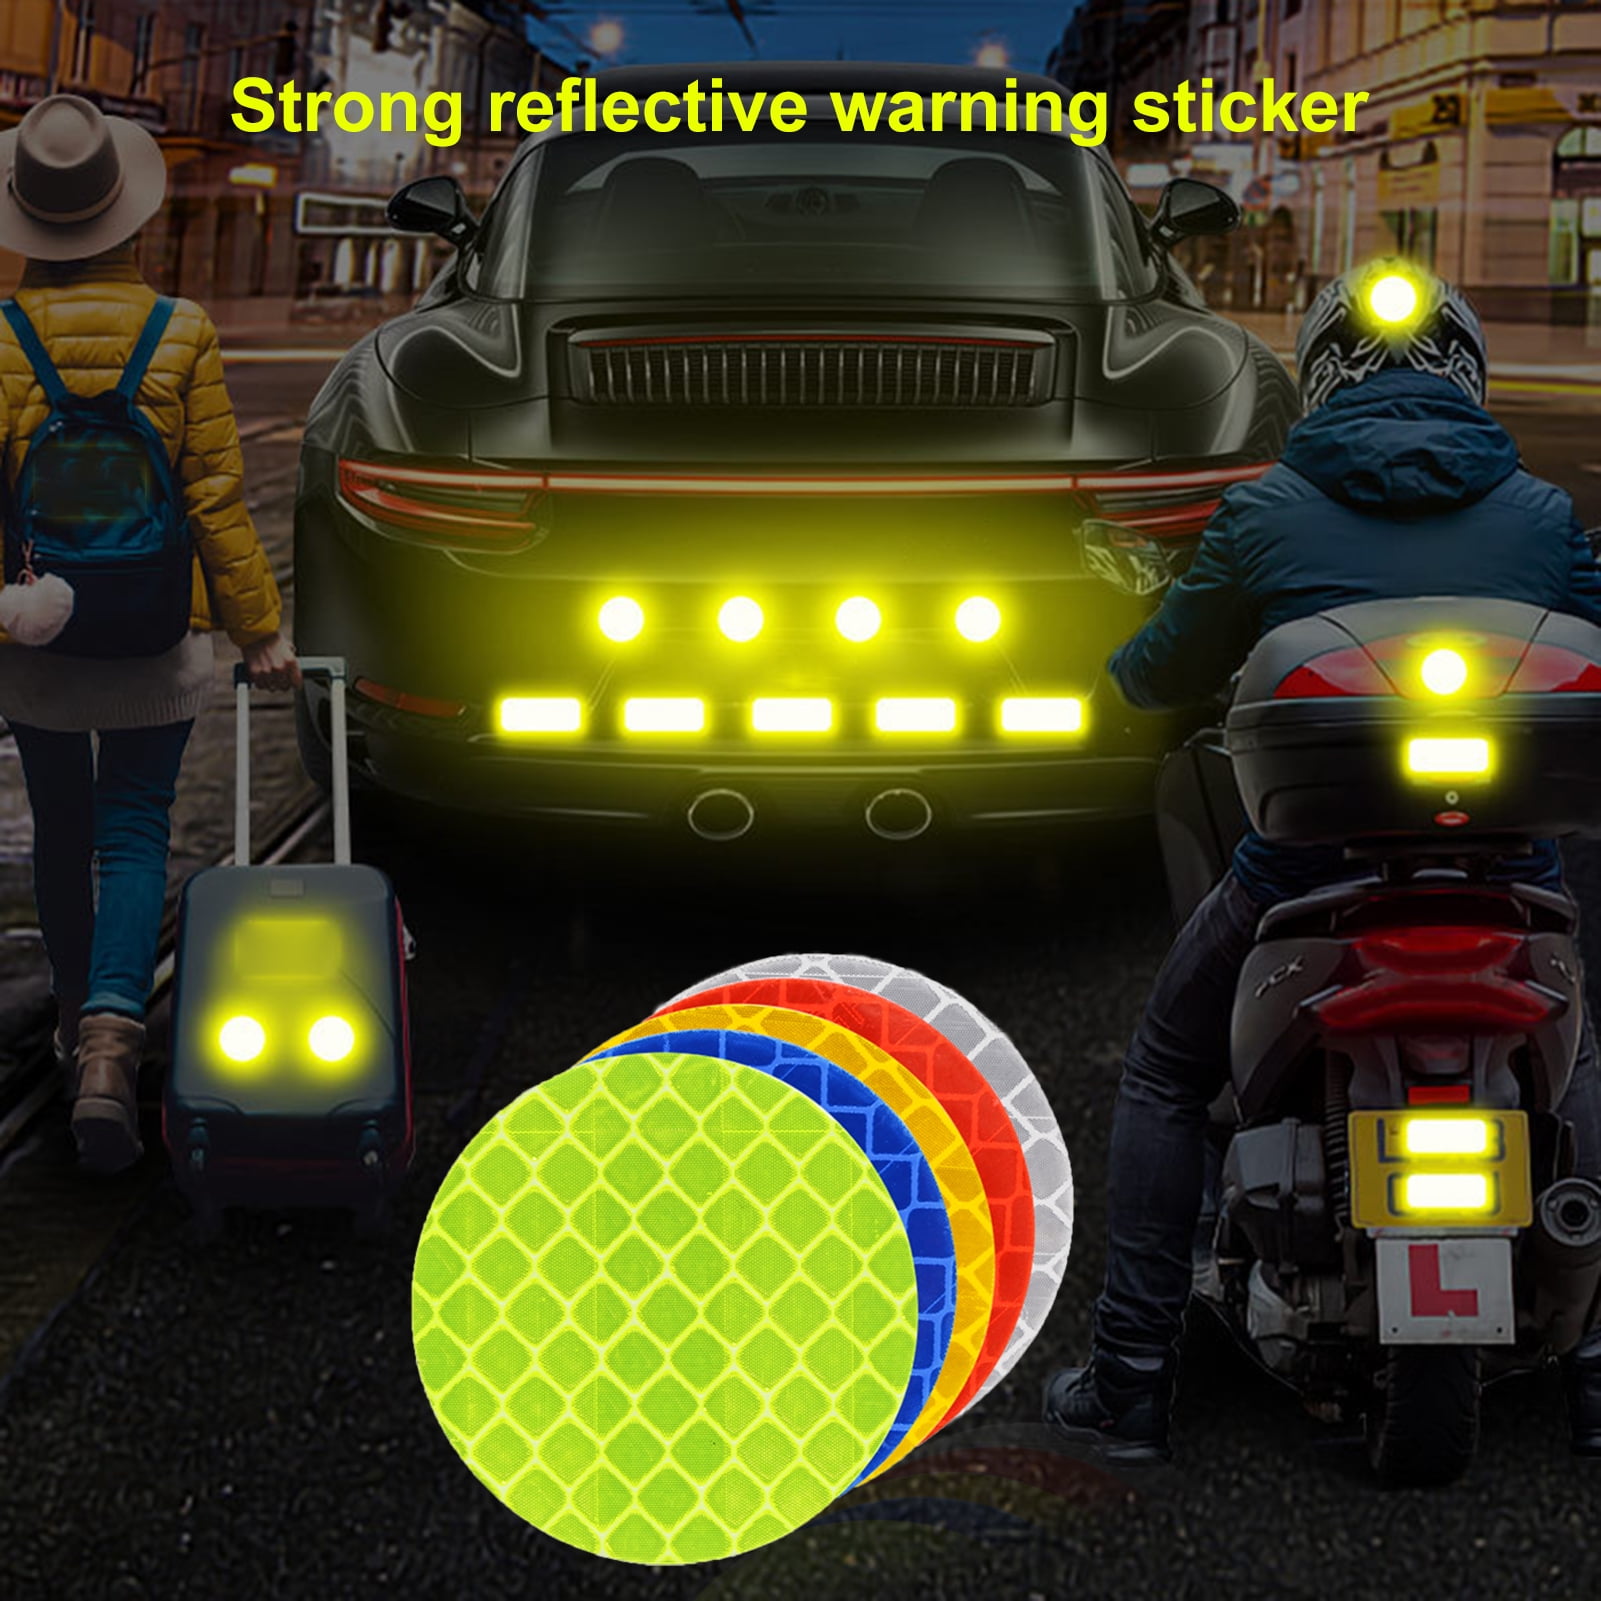 Reflective Safety Stickers Bike Motorcycle Helmet Car Waterproof YELLOW   retro 